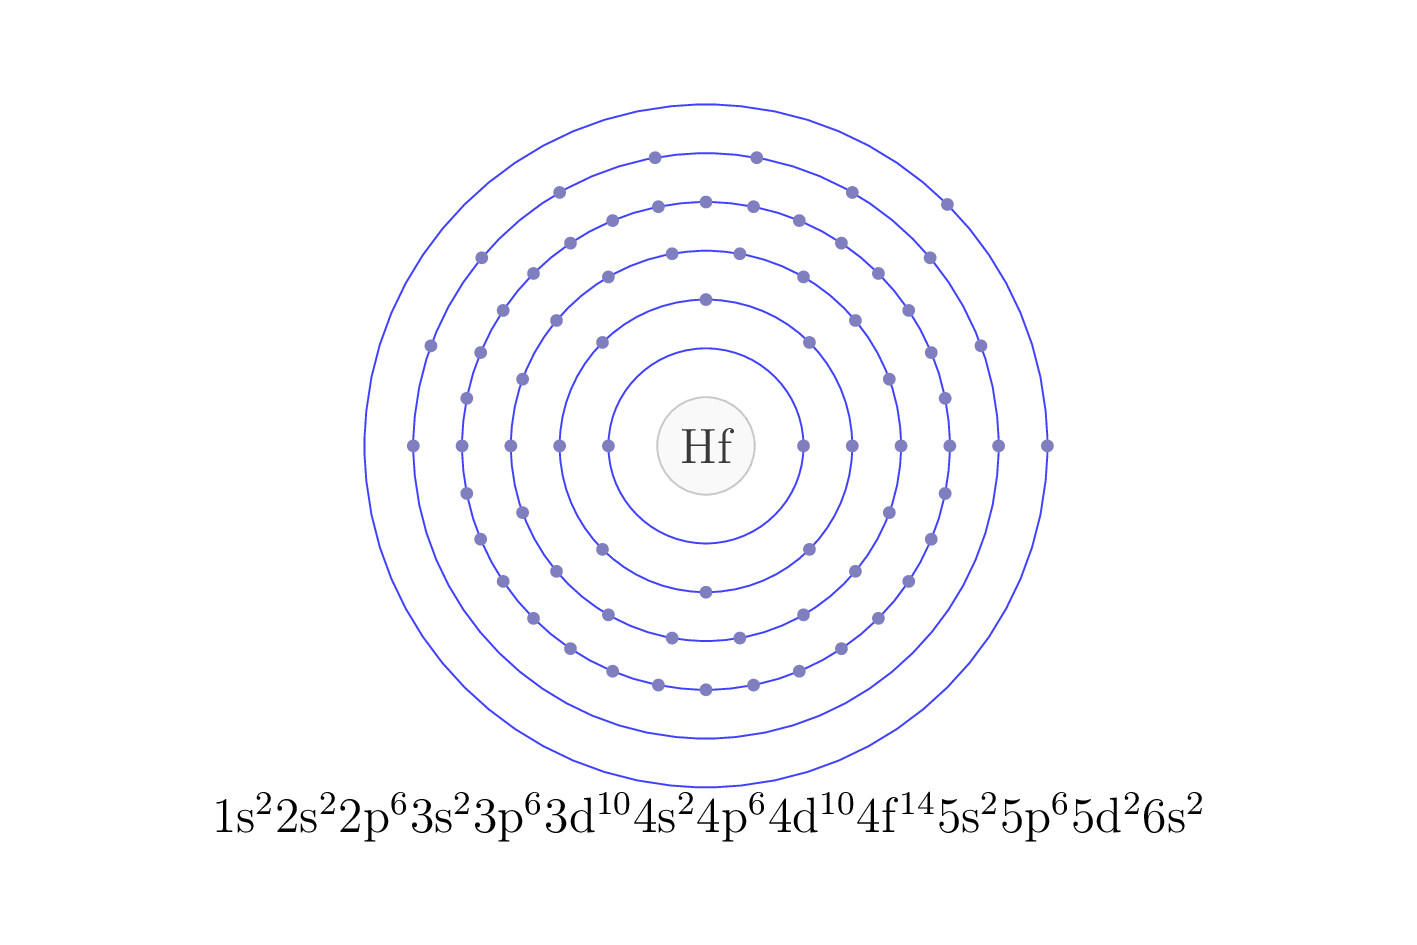 electron configuration of element Hf